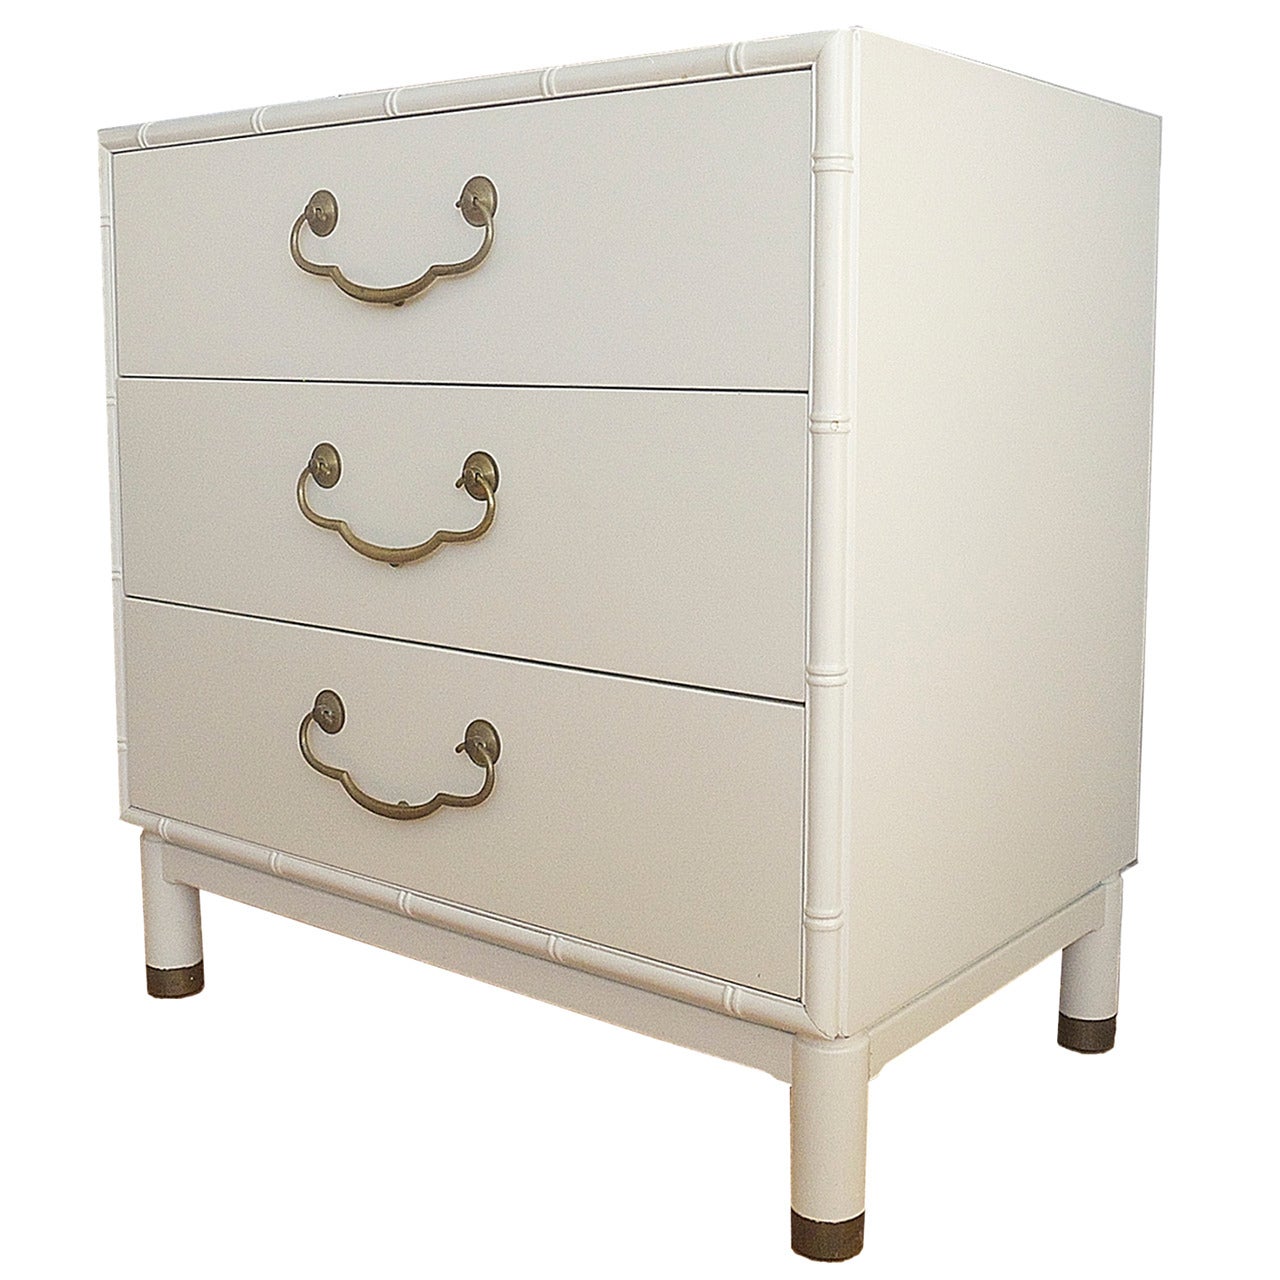 Henredon Three-Drawer Dresser with Brass Detail in the Manner of Dorothy Draper